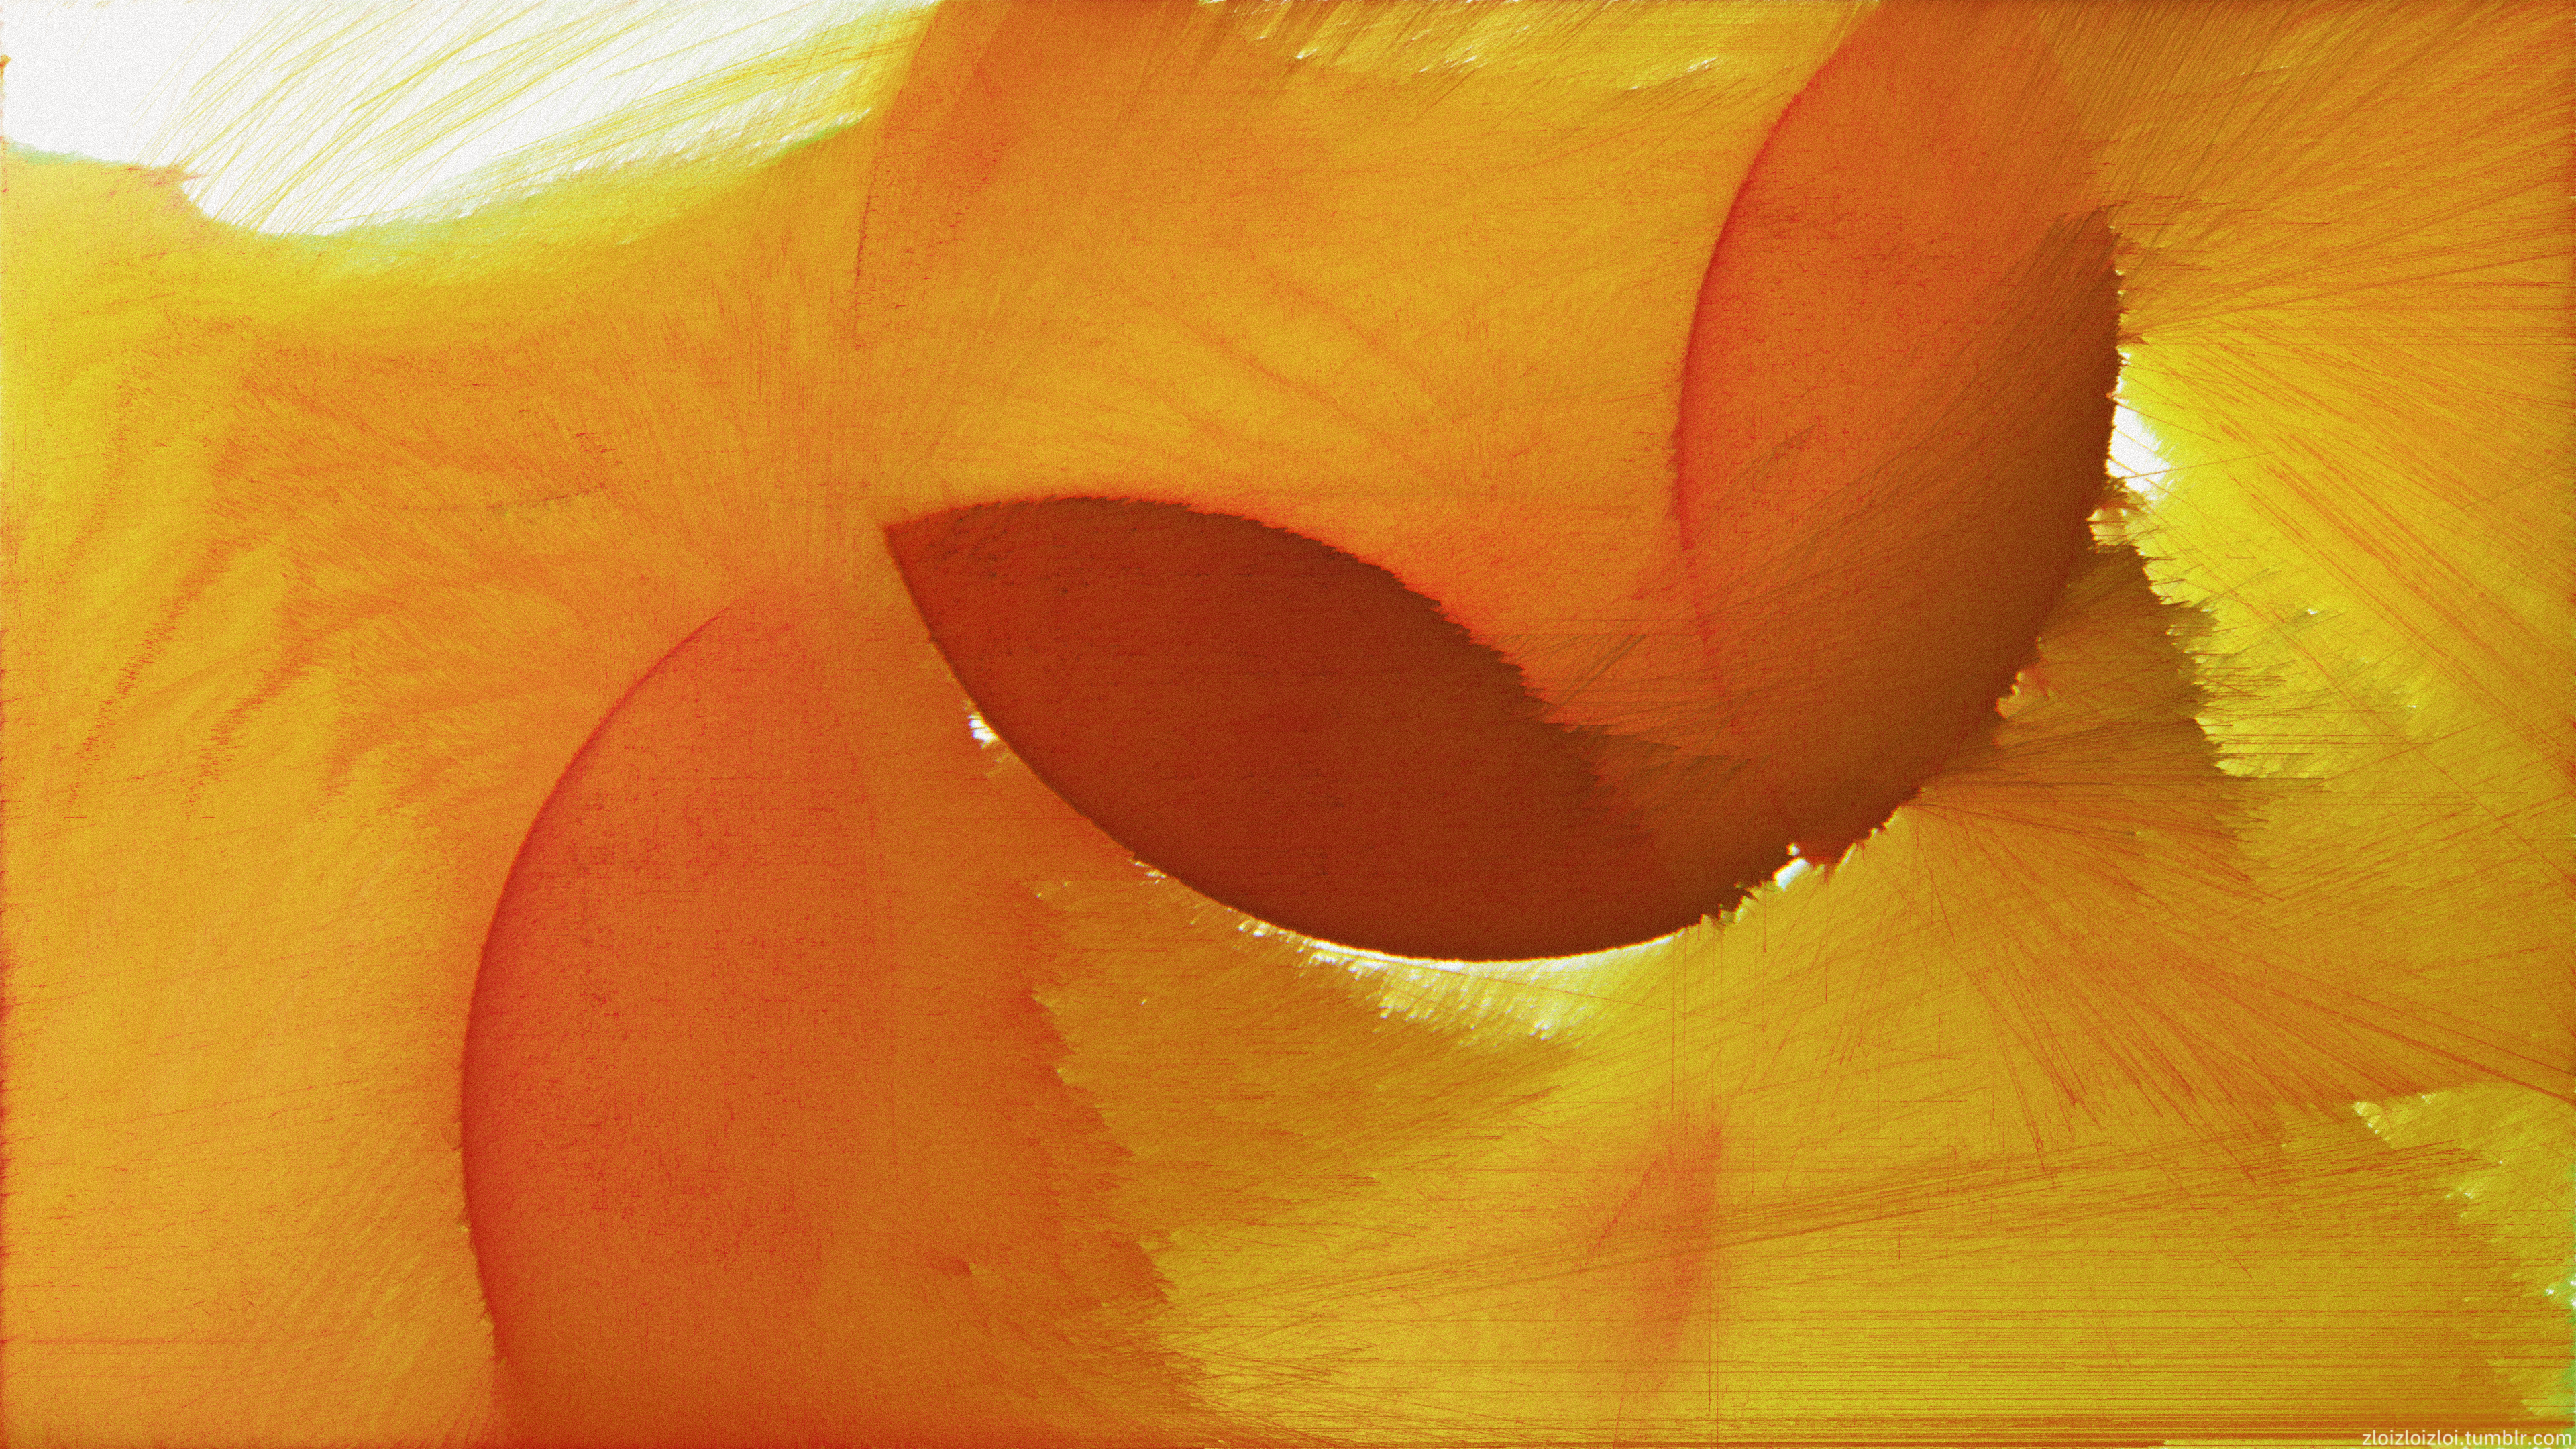 General 3840x2160 glitch art abstract yellow orange digital art Zloizloizloi watermarked